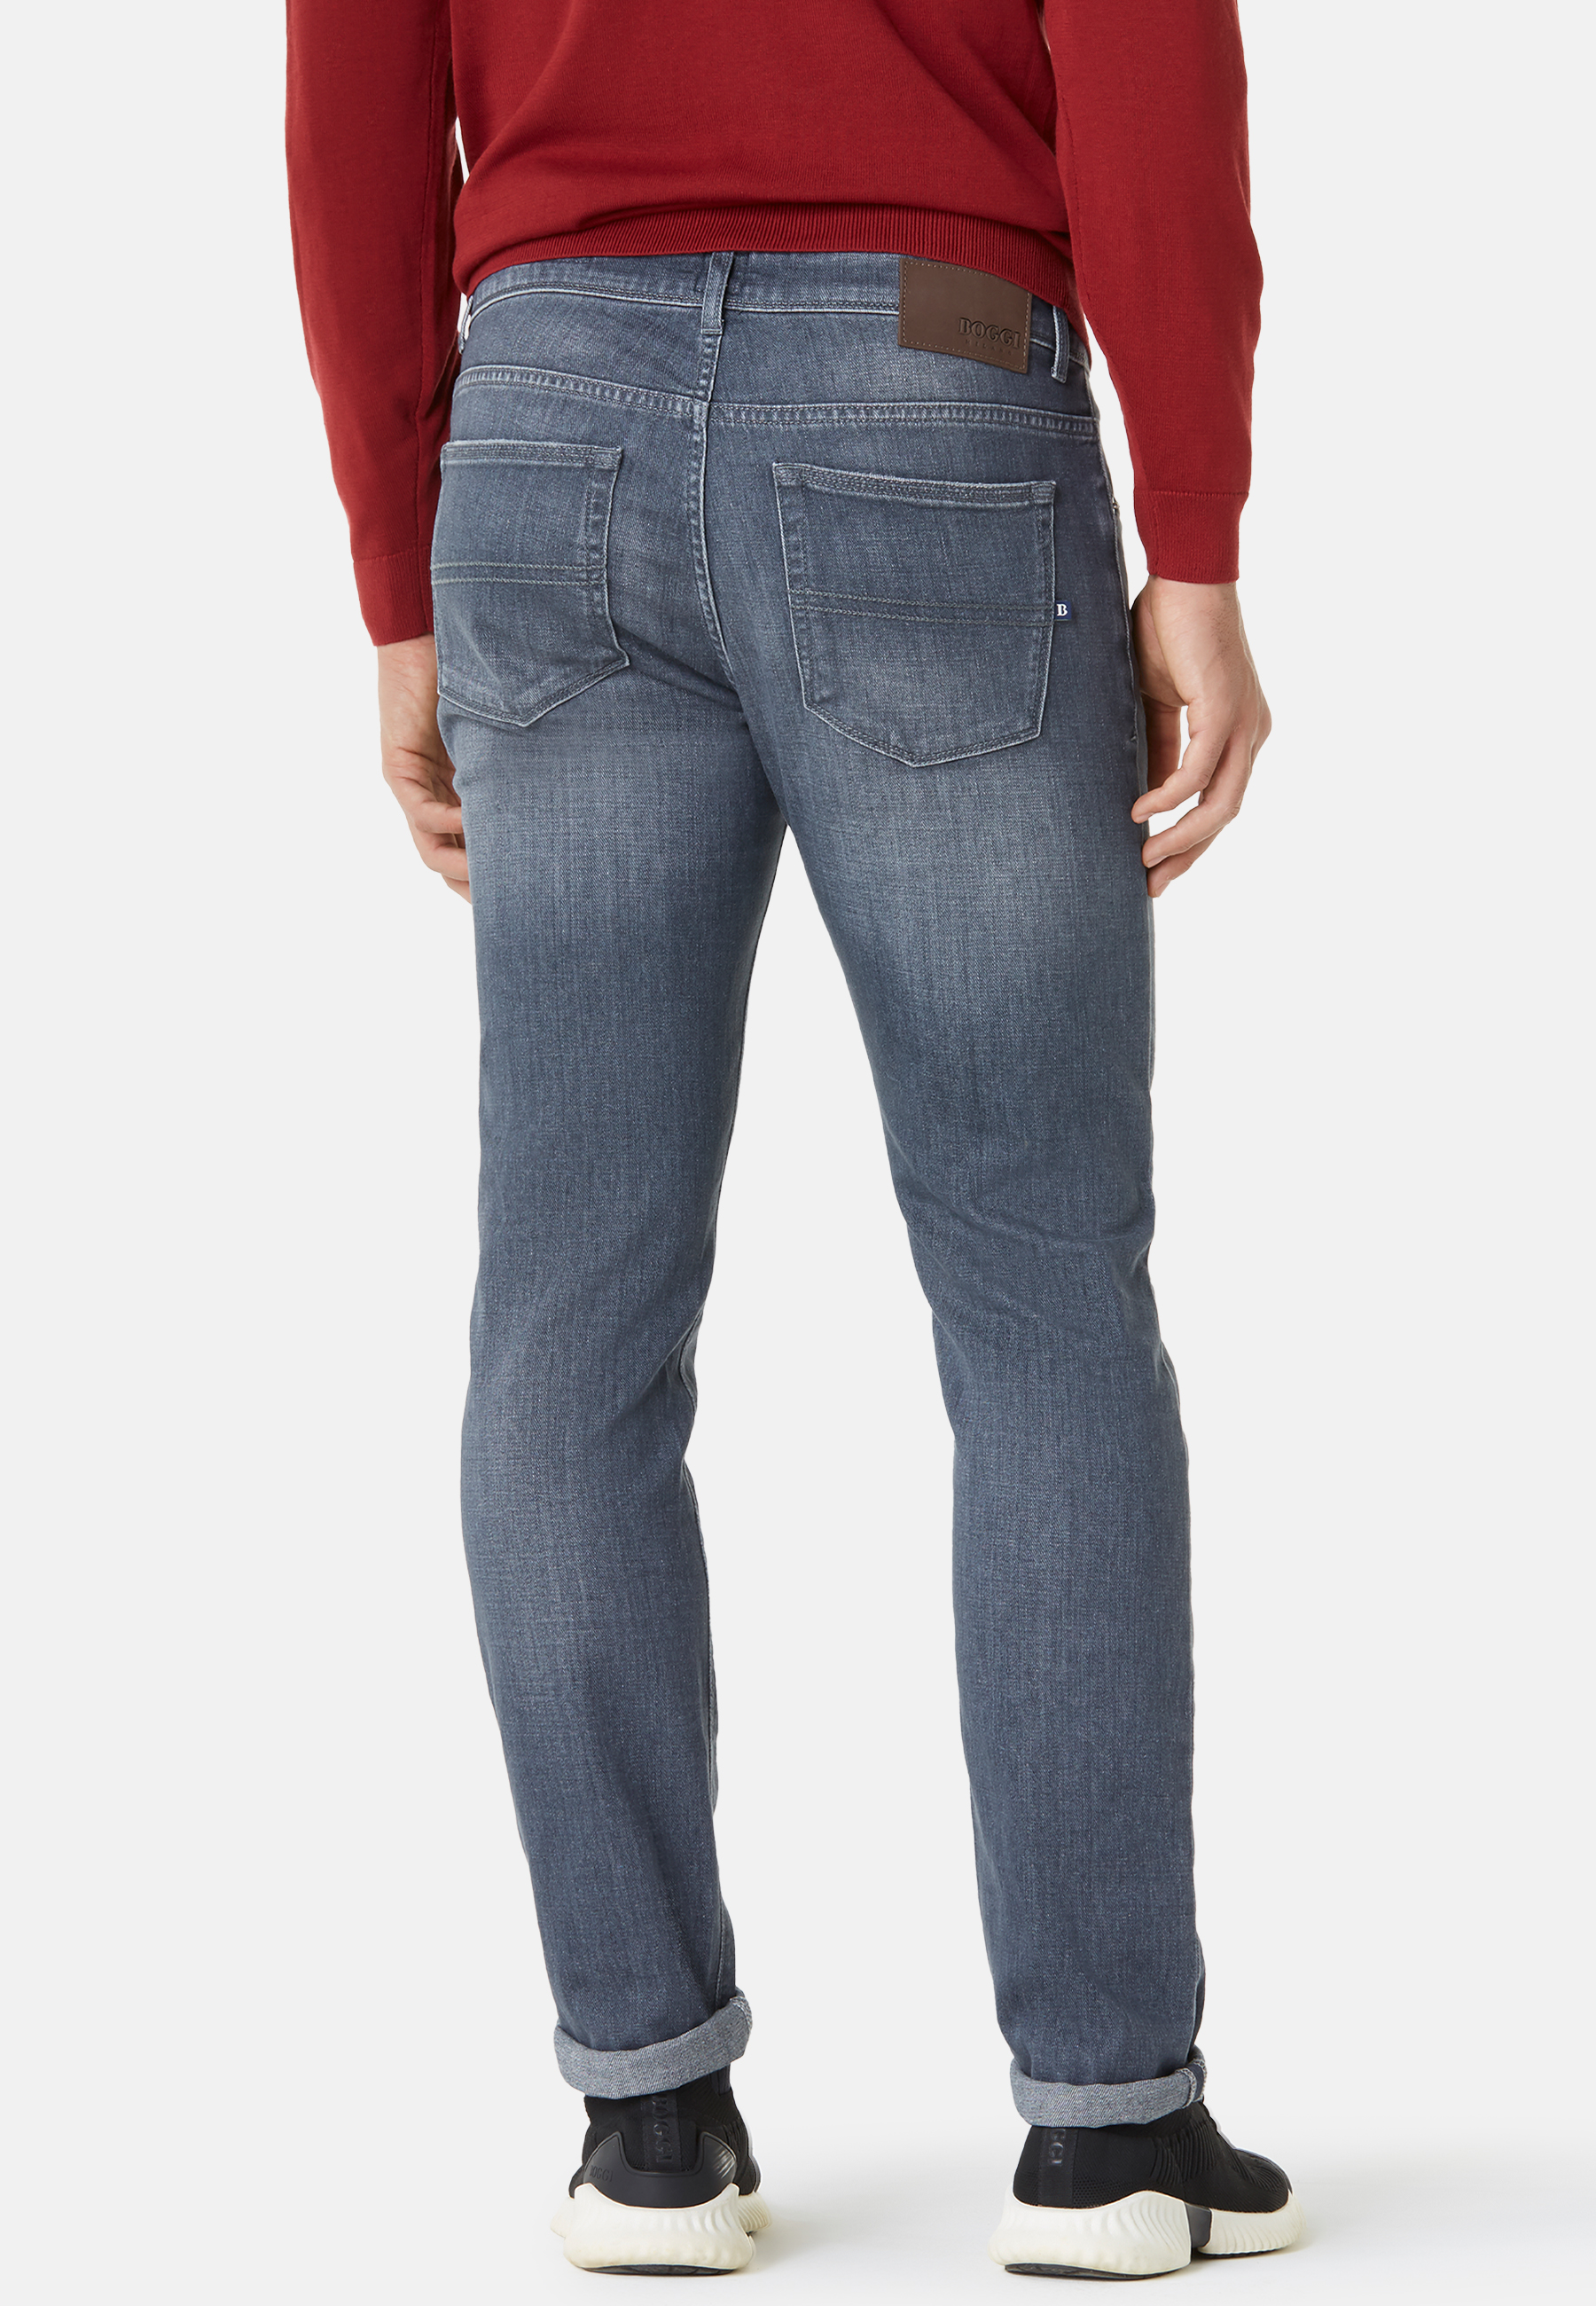 Men's Grey Stretch Denim Jeans